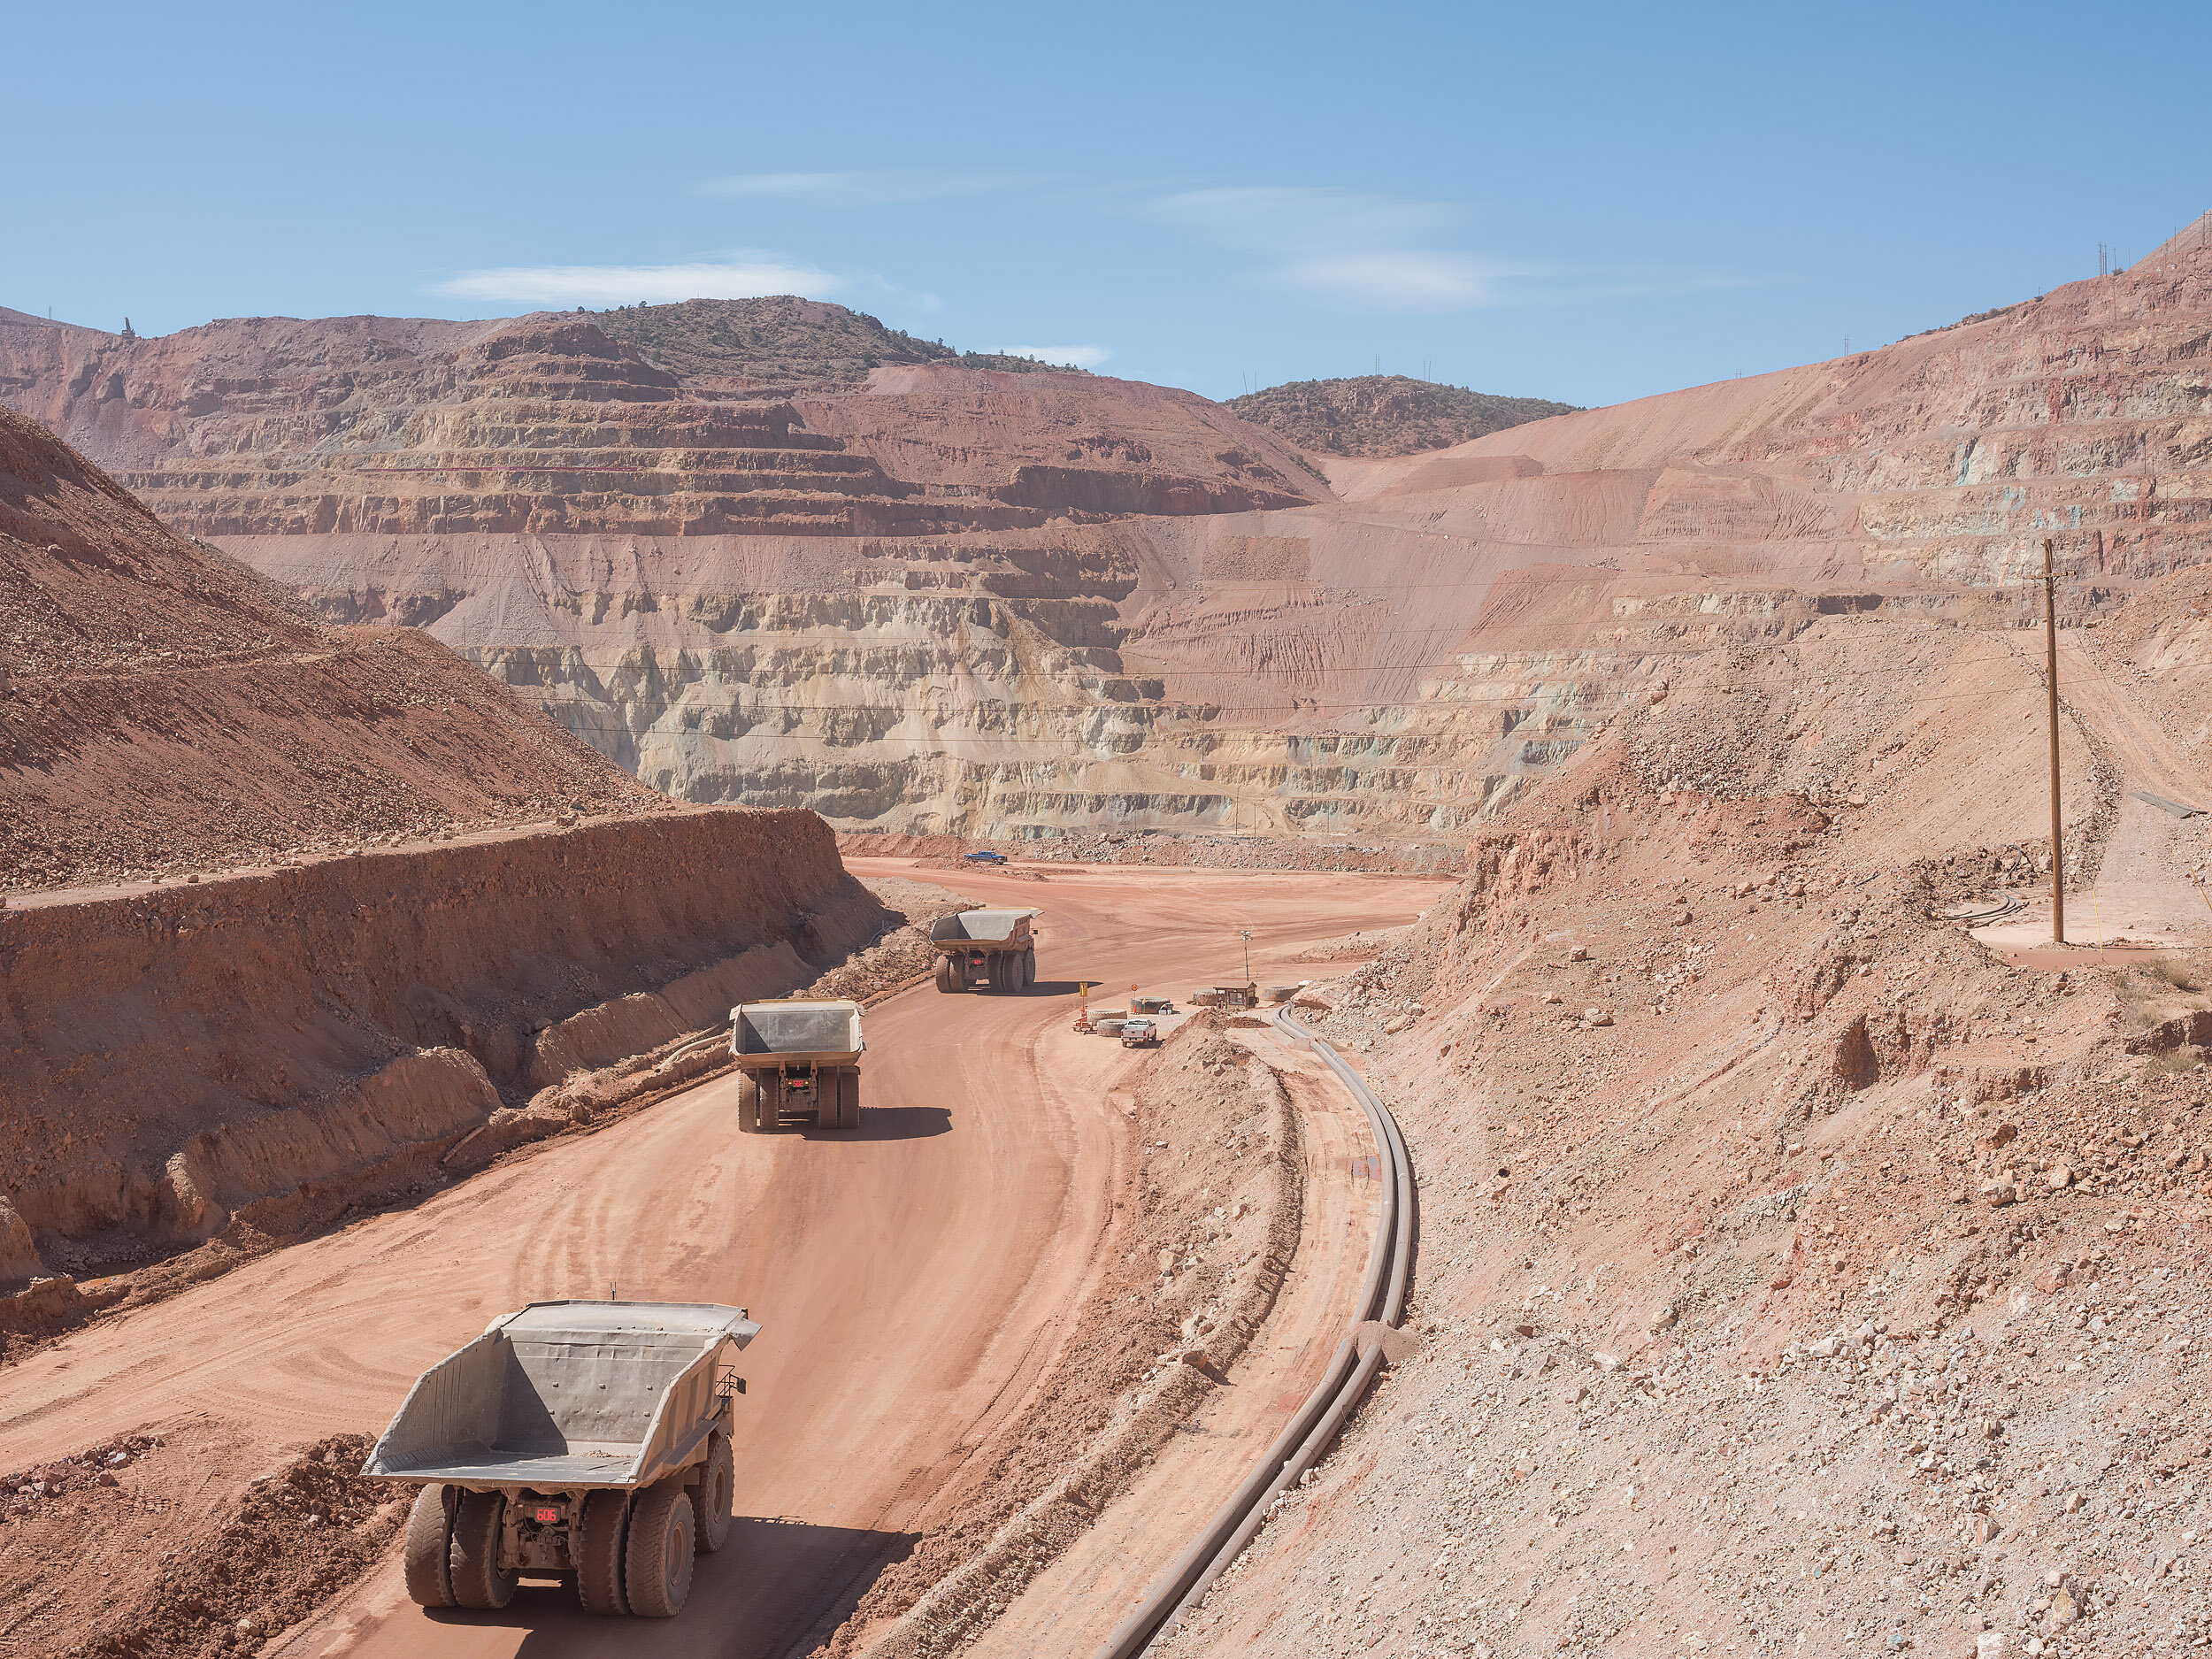 Haul trucks approaching the Santa Rosa Gulch, the western edge of the mine